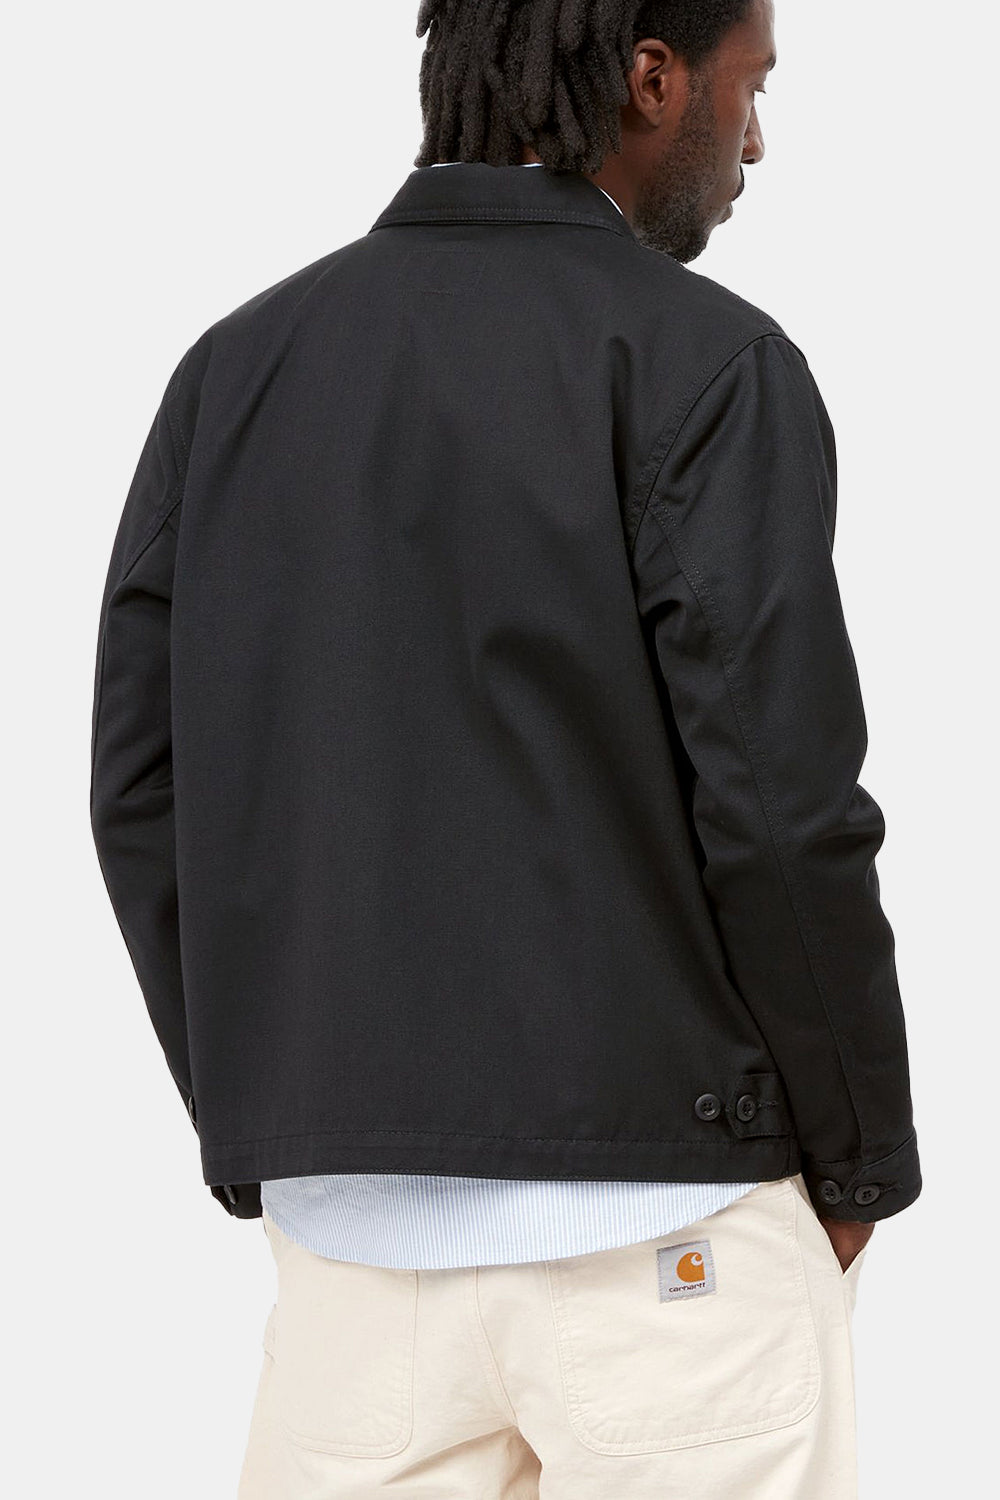 Carhartt WIP Modular Jacket (Black Rinsed)
